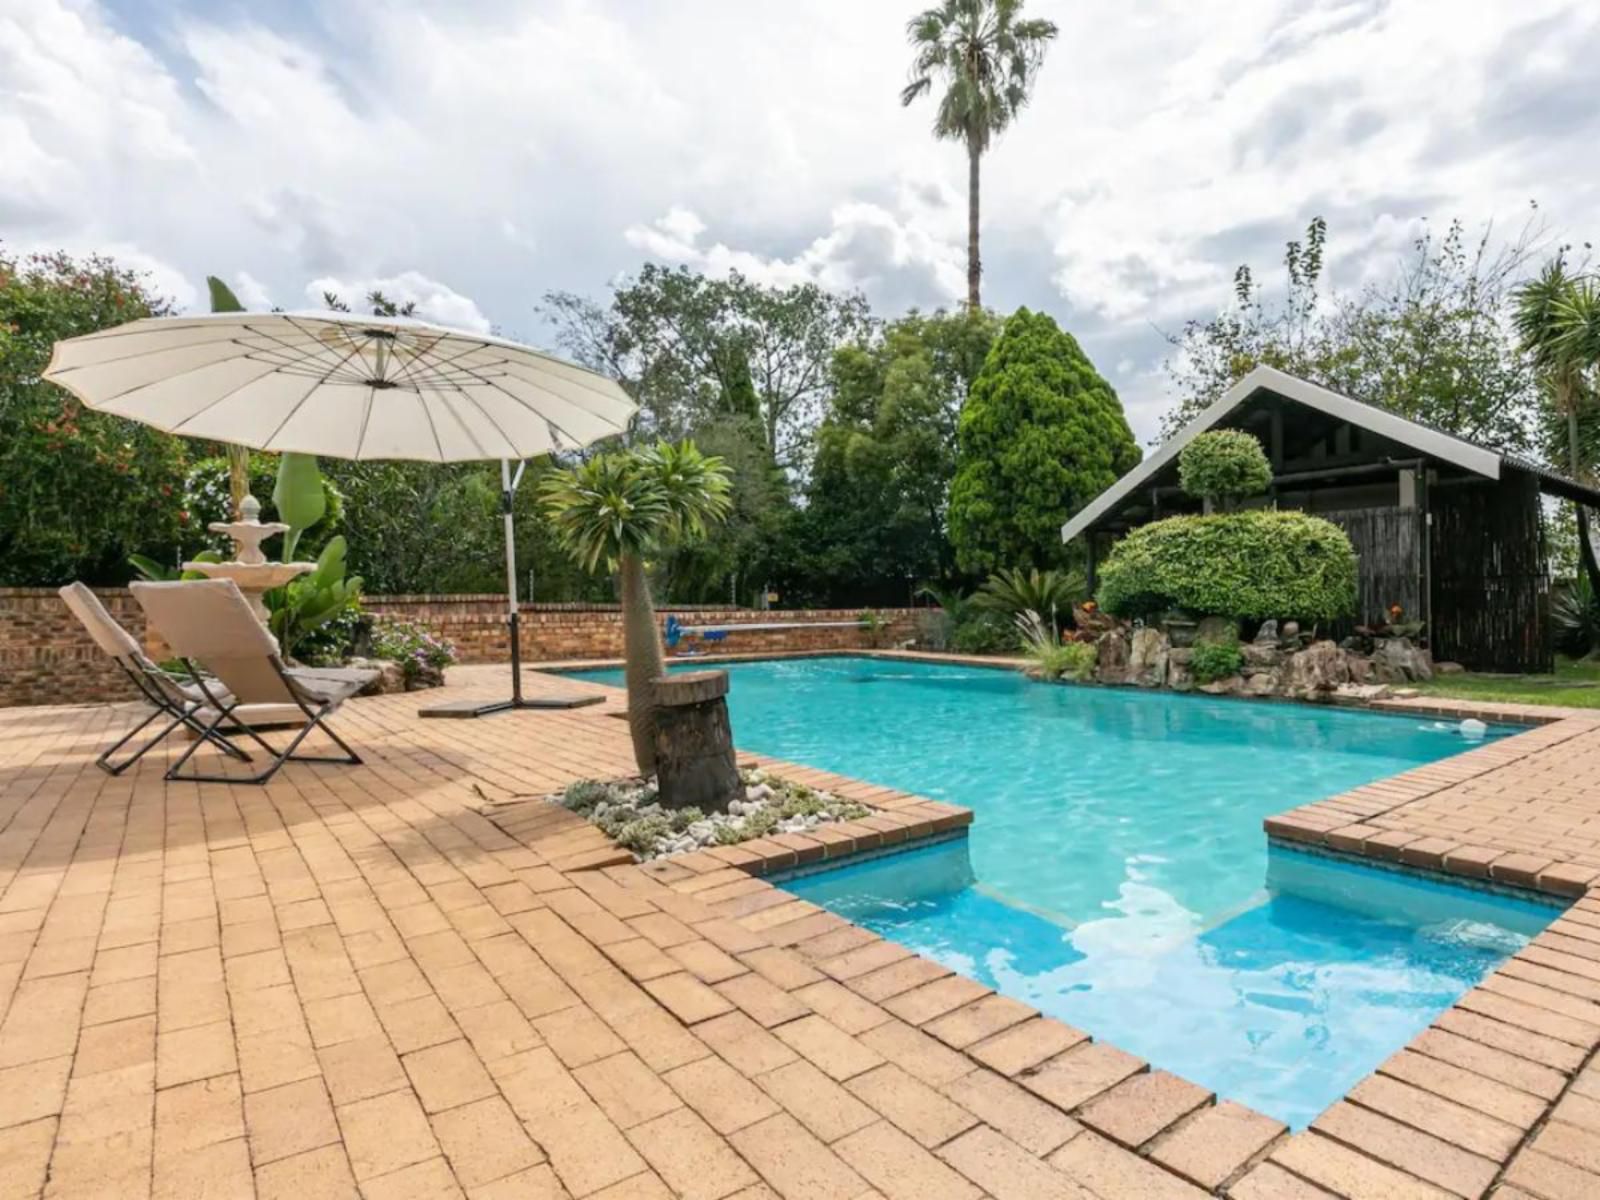 New Eden Suites Norscot Manor Johannesburg Gauteng South Africa Garden, Nature, Plant, Swimming Pool